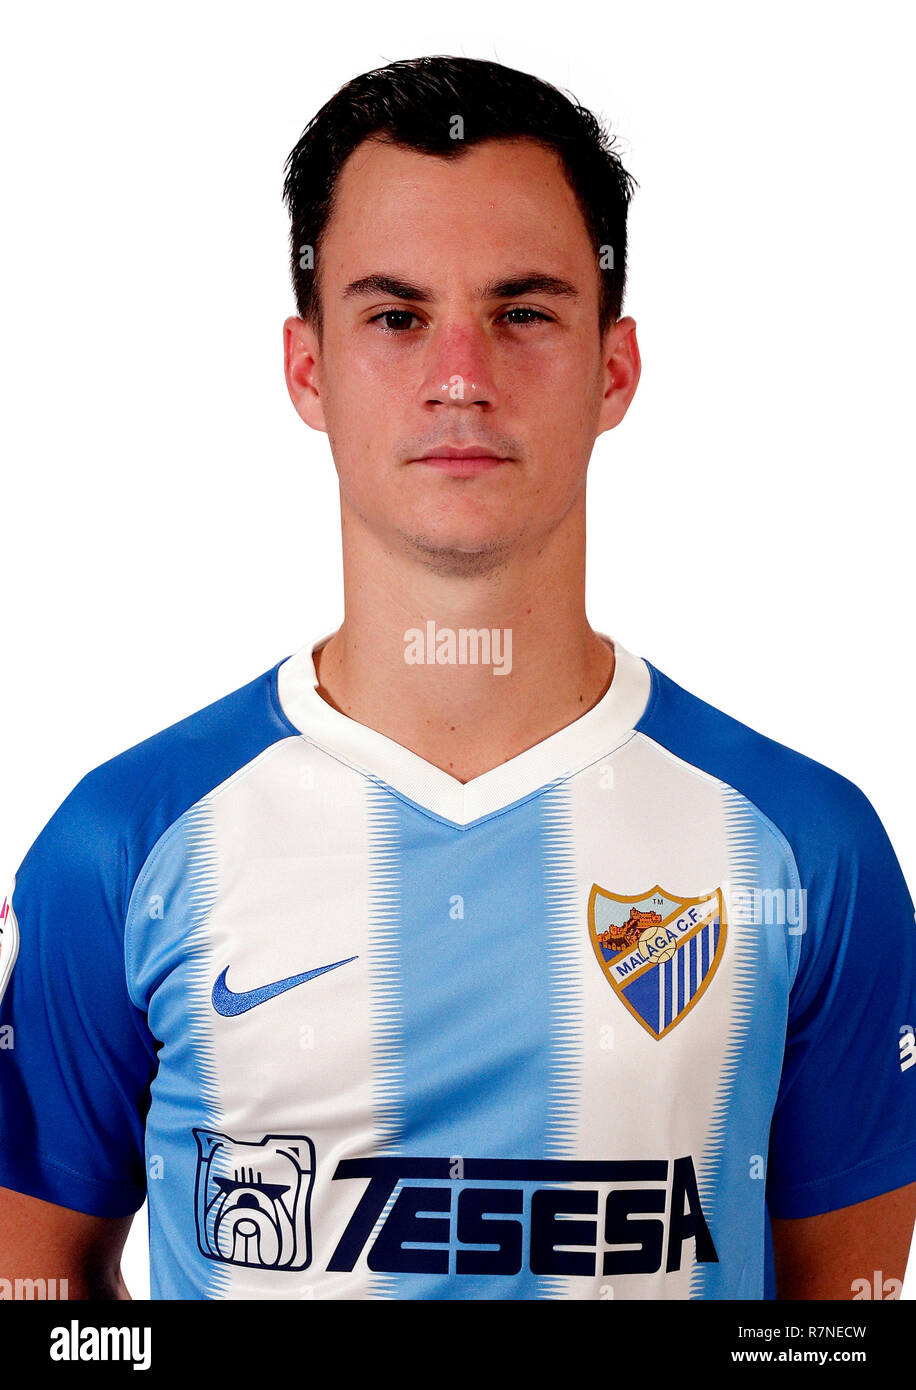 Pablo Acosta - Player profile